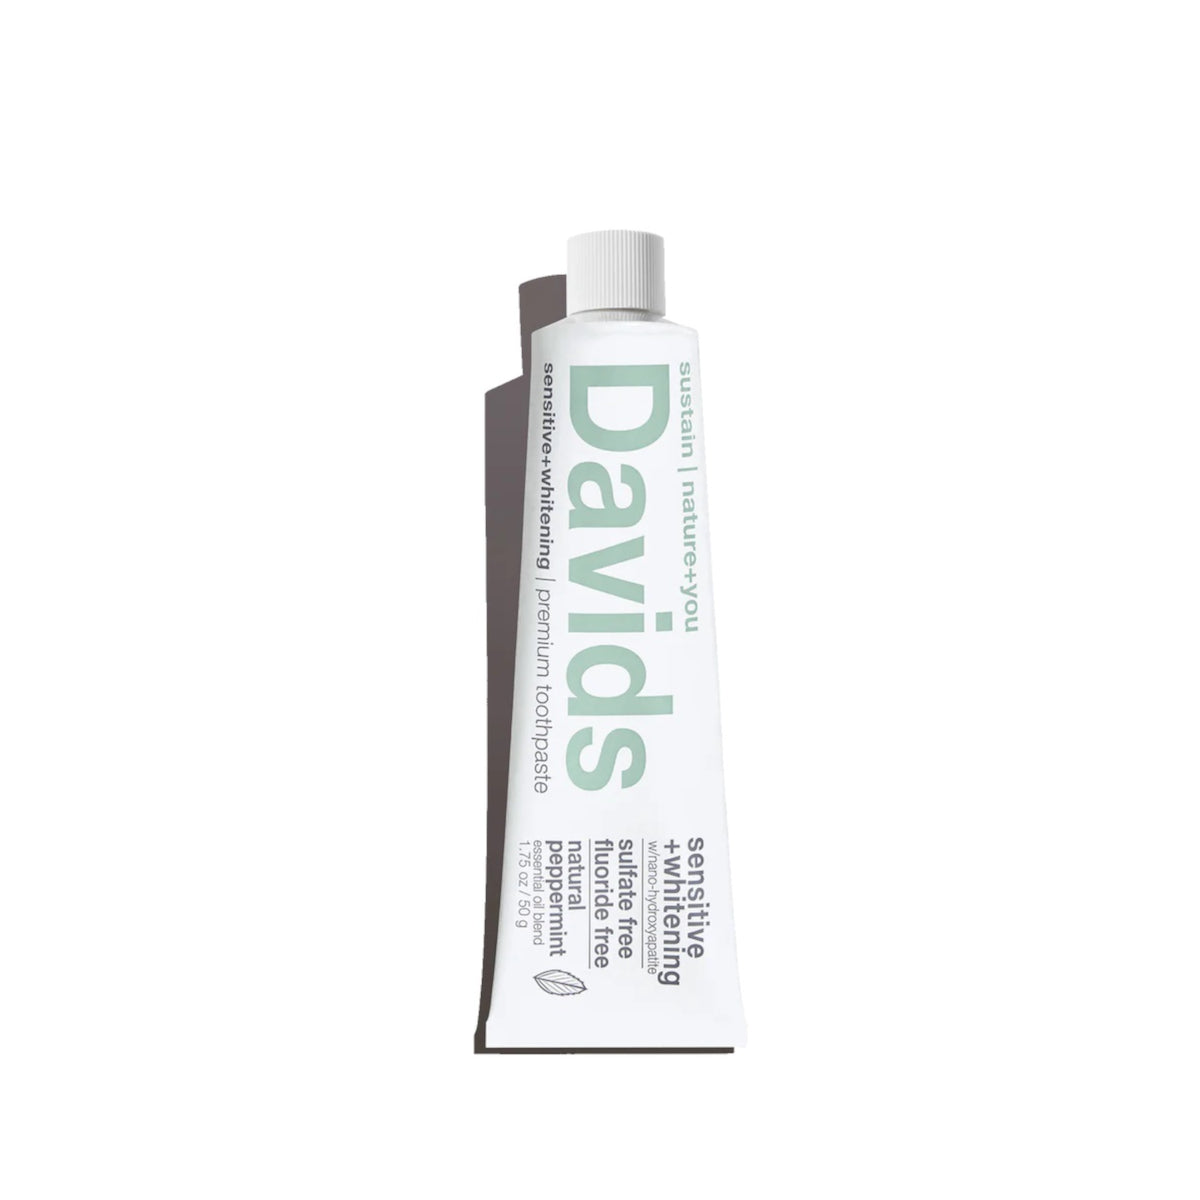 DAVID'S NATURAL TOOTHPASTE Sensitive + Whitening Nano-Hydroxyapatite Premium Toothpaste Peppermint travel size